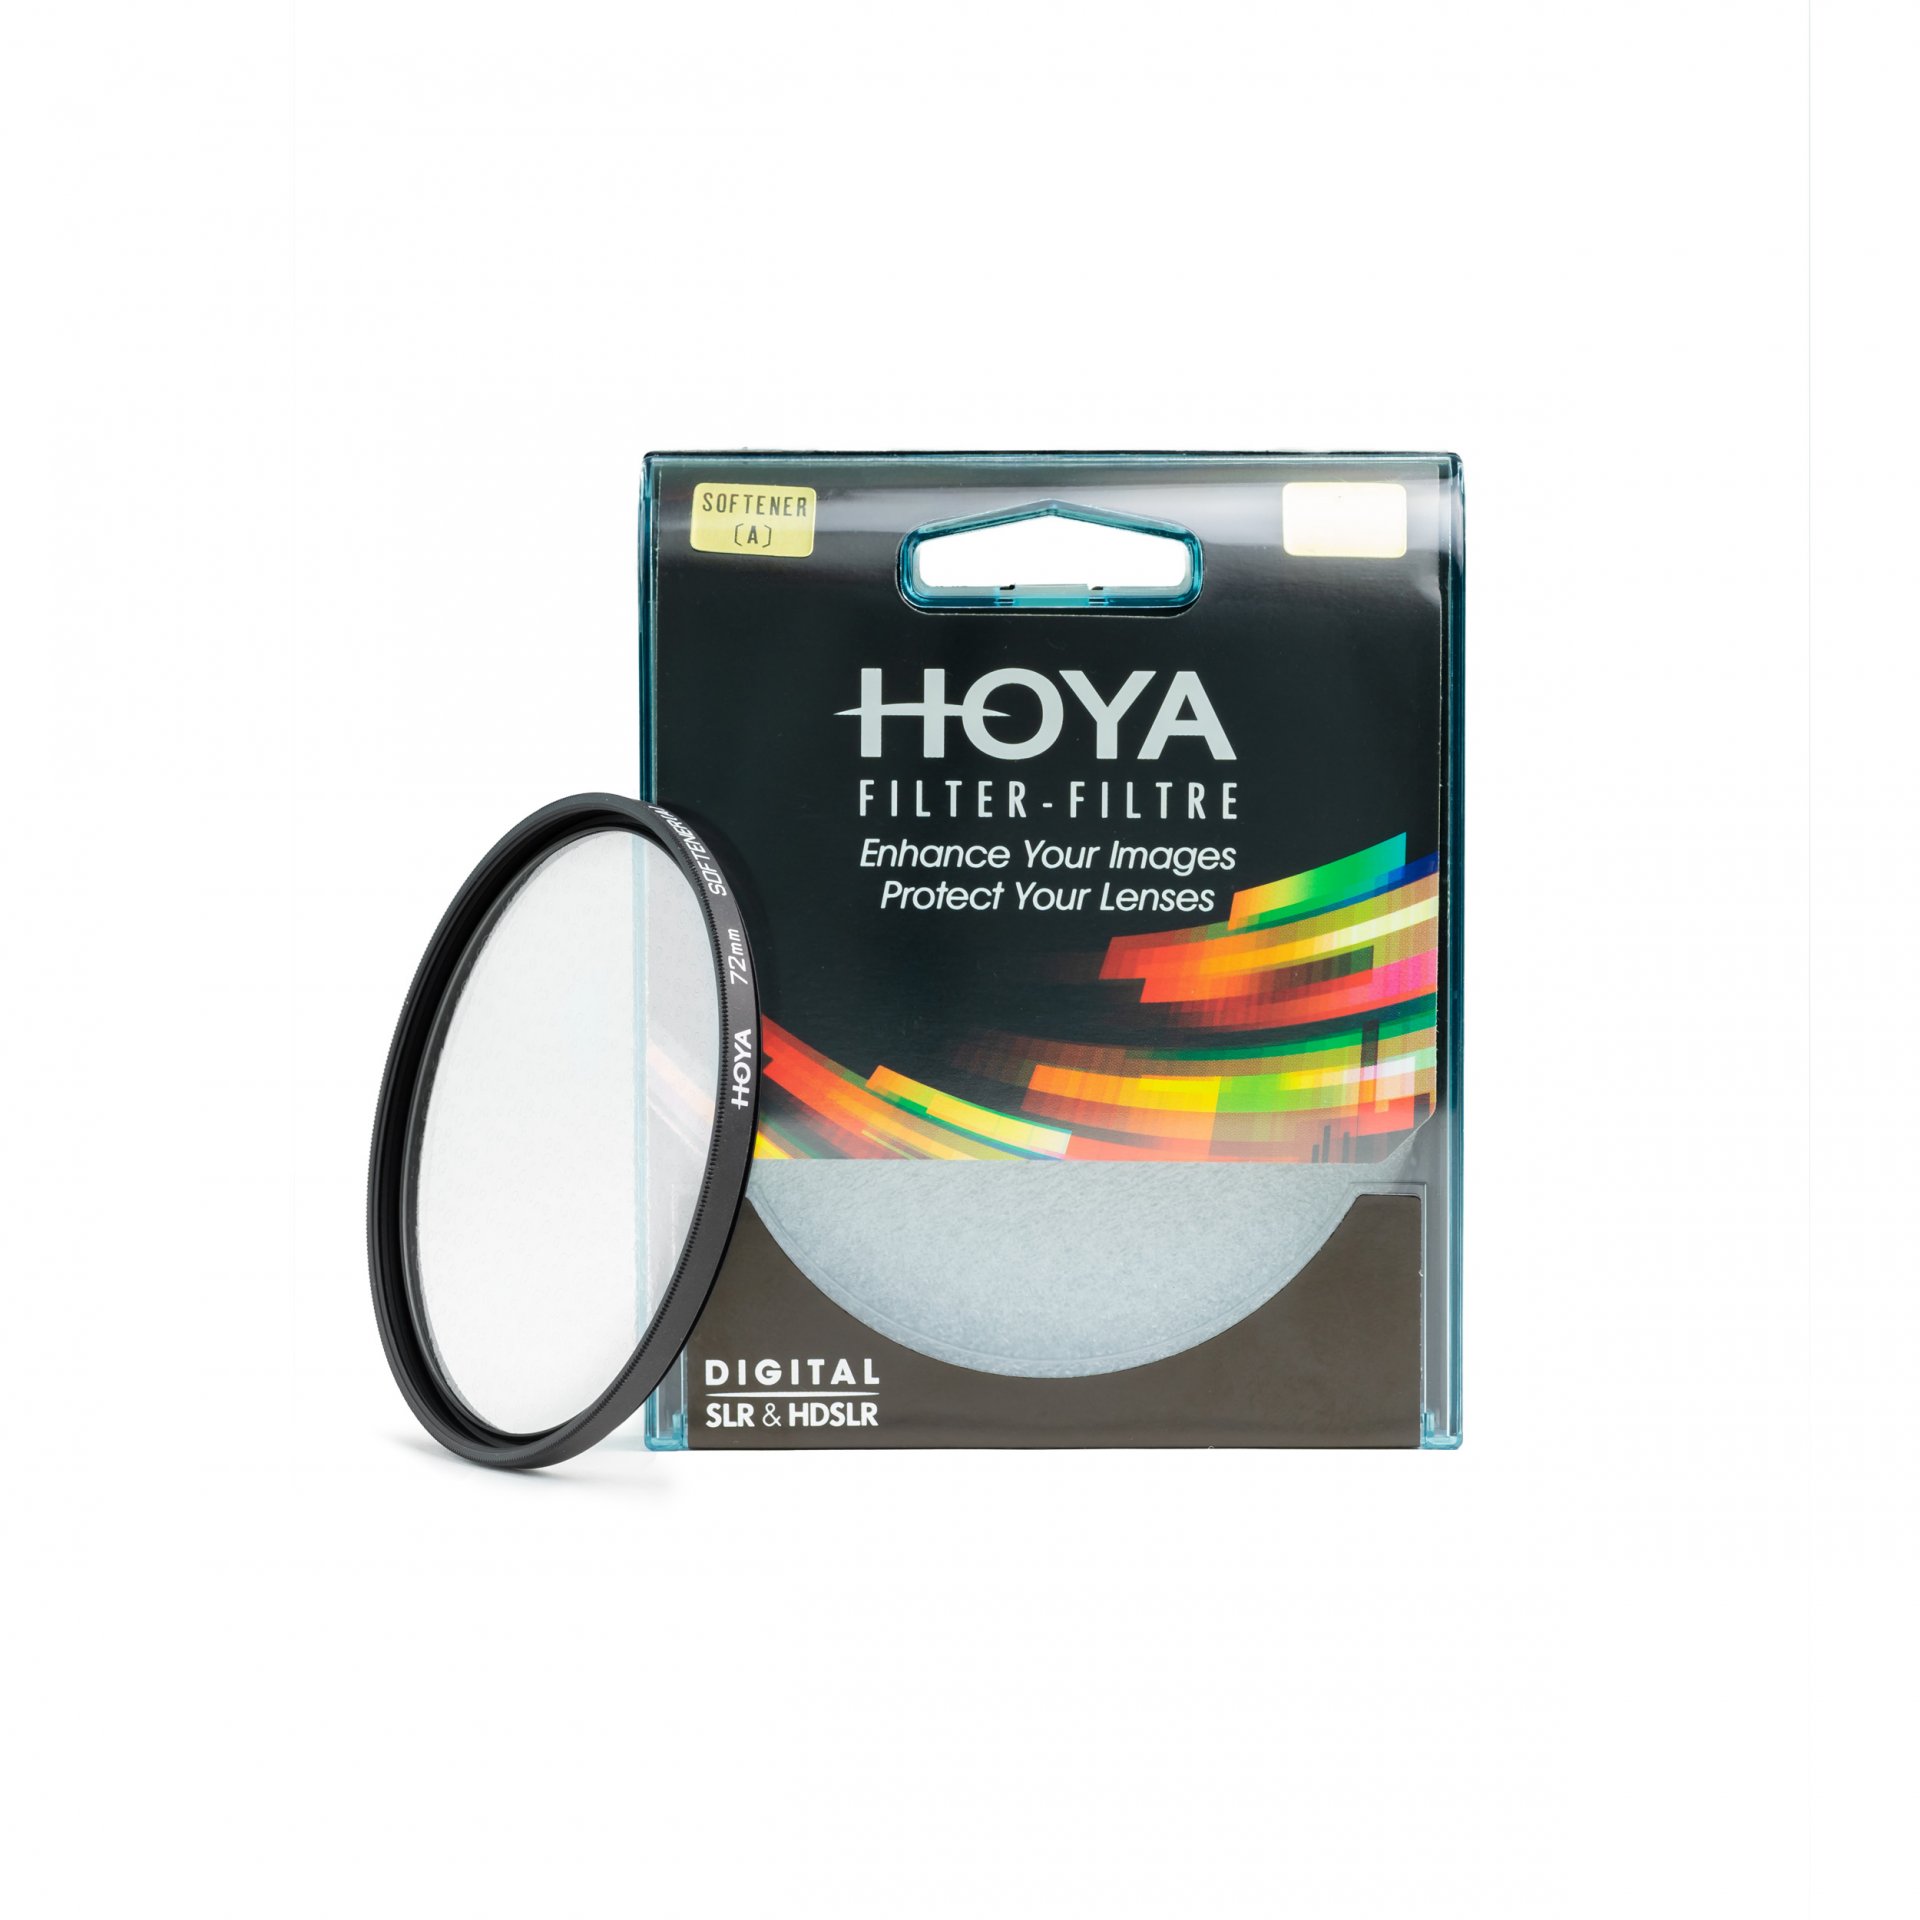 Hoya Softener A